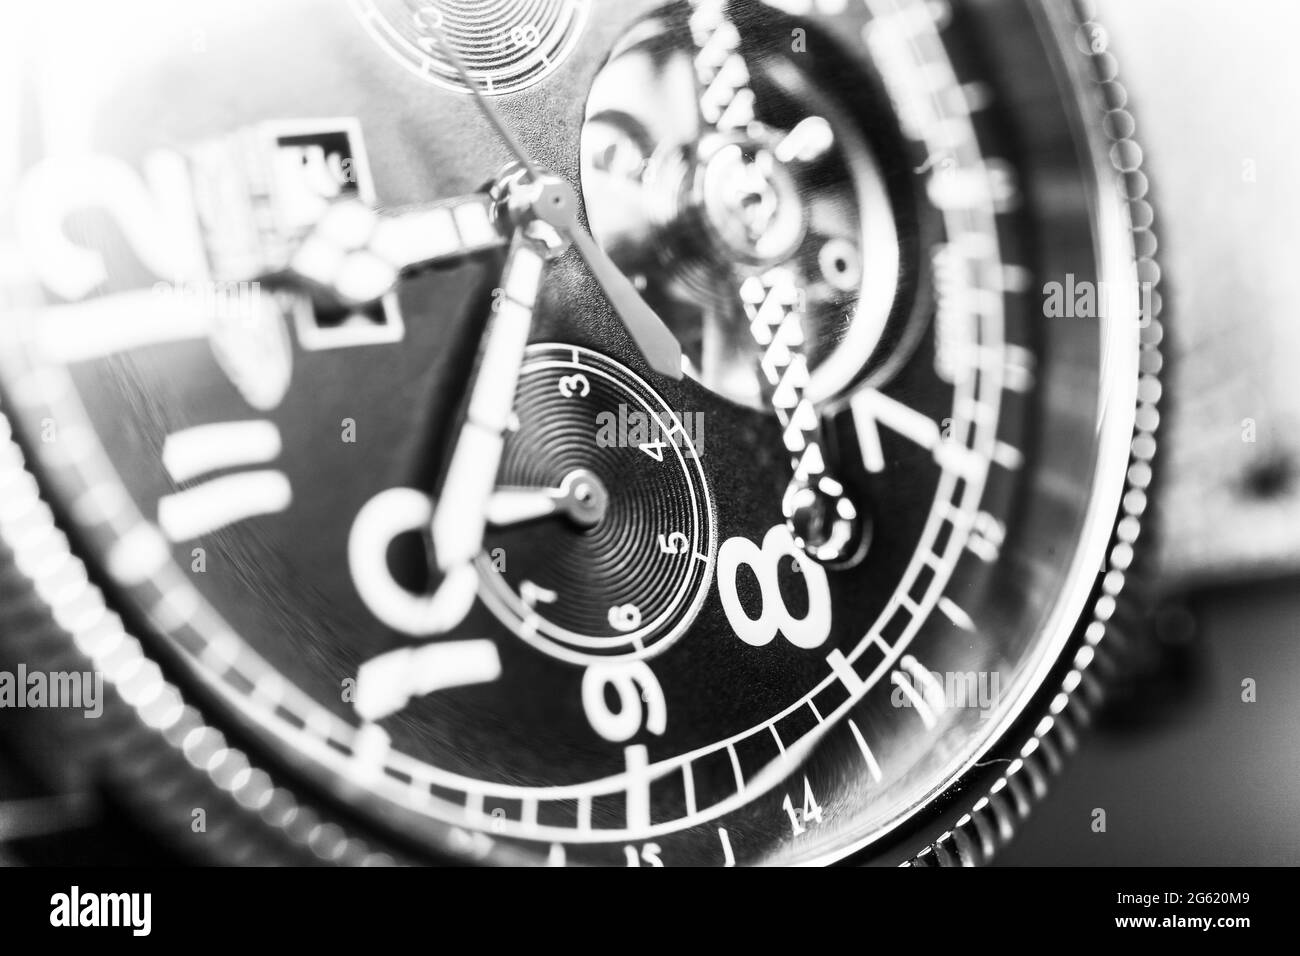 Automatic male wrist watch, close-up black and white photo Stock Photo